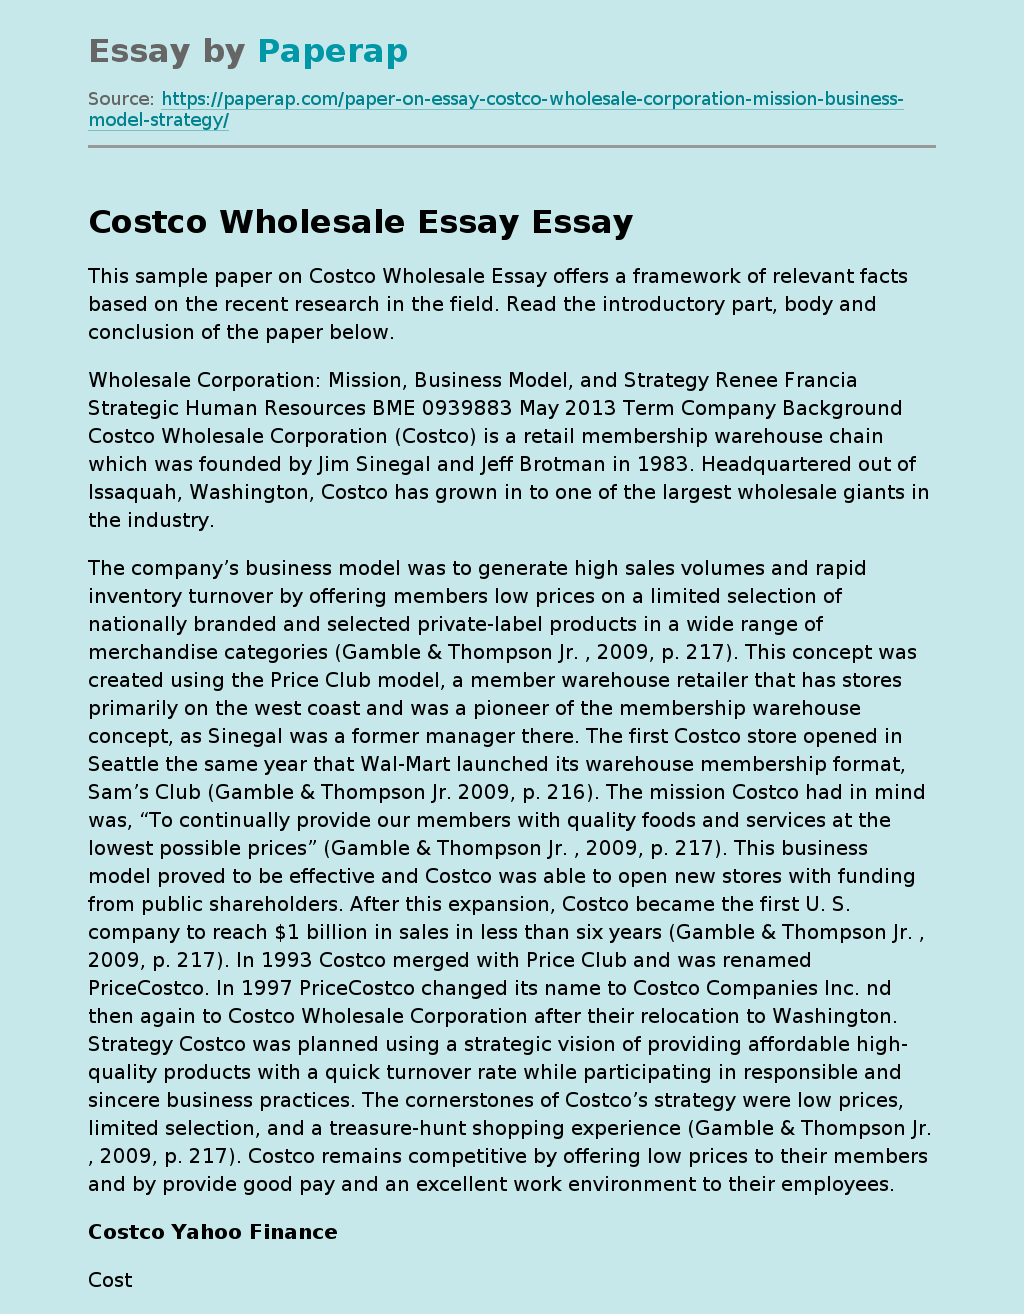 Costco Wholesale Essay